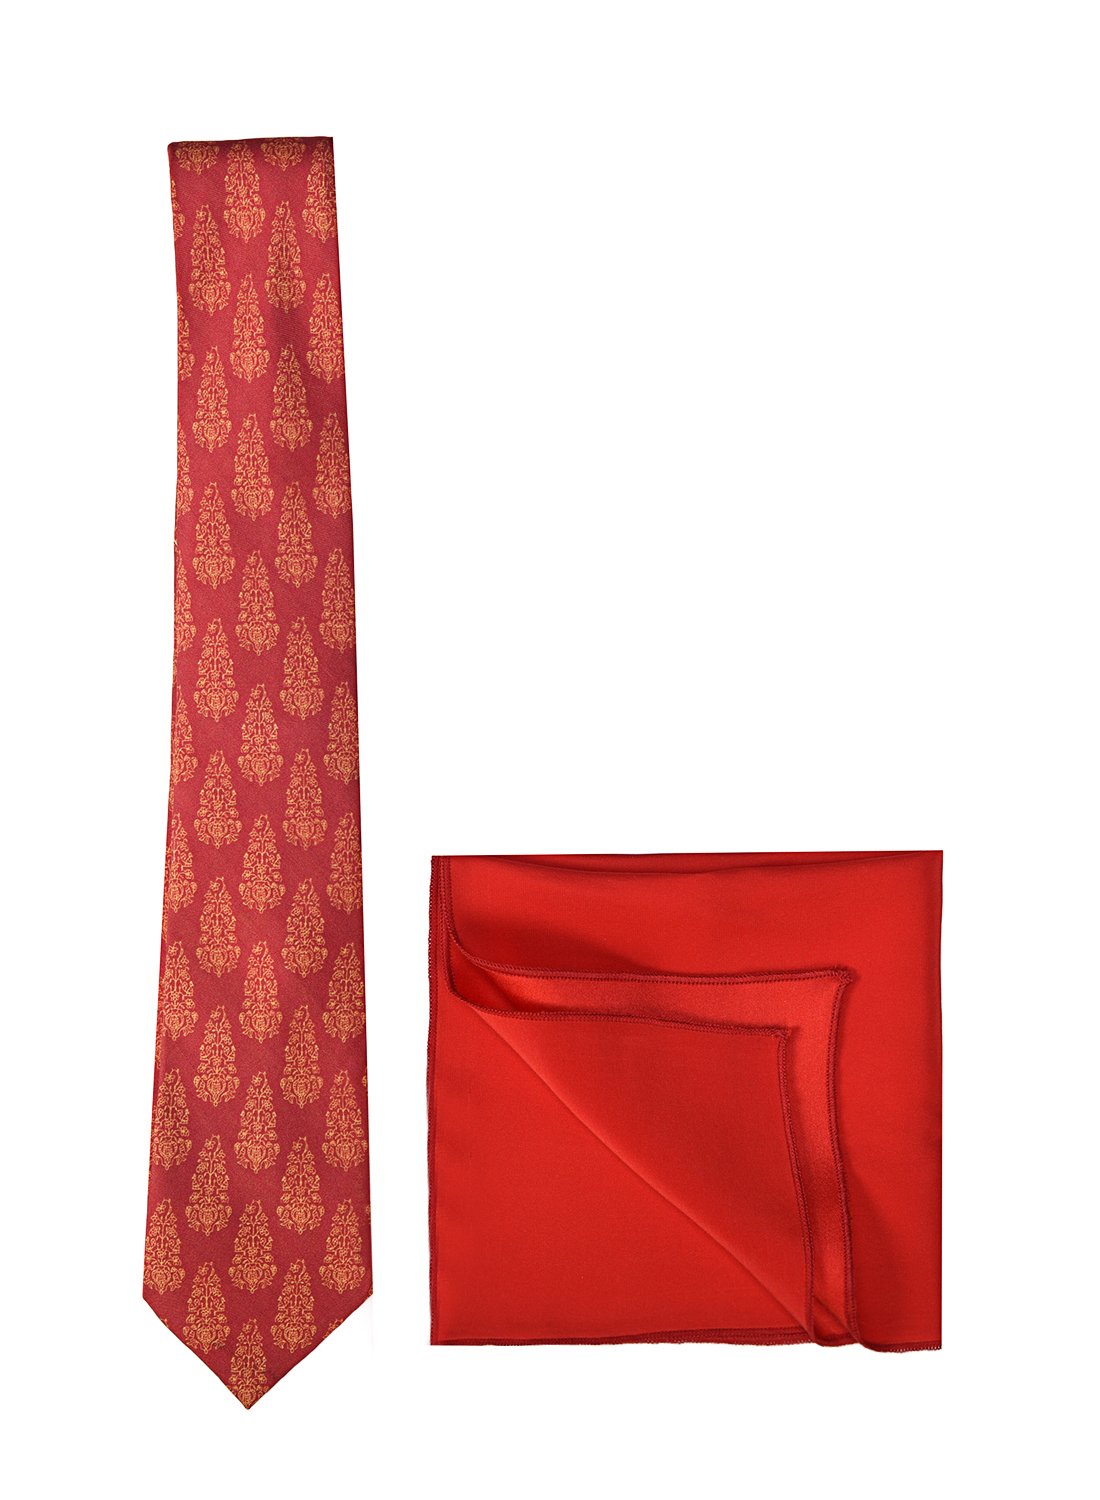 Chokore Red & Orange Silk Tie & Red color silk pocket square set